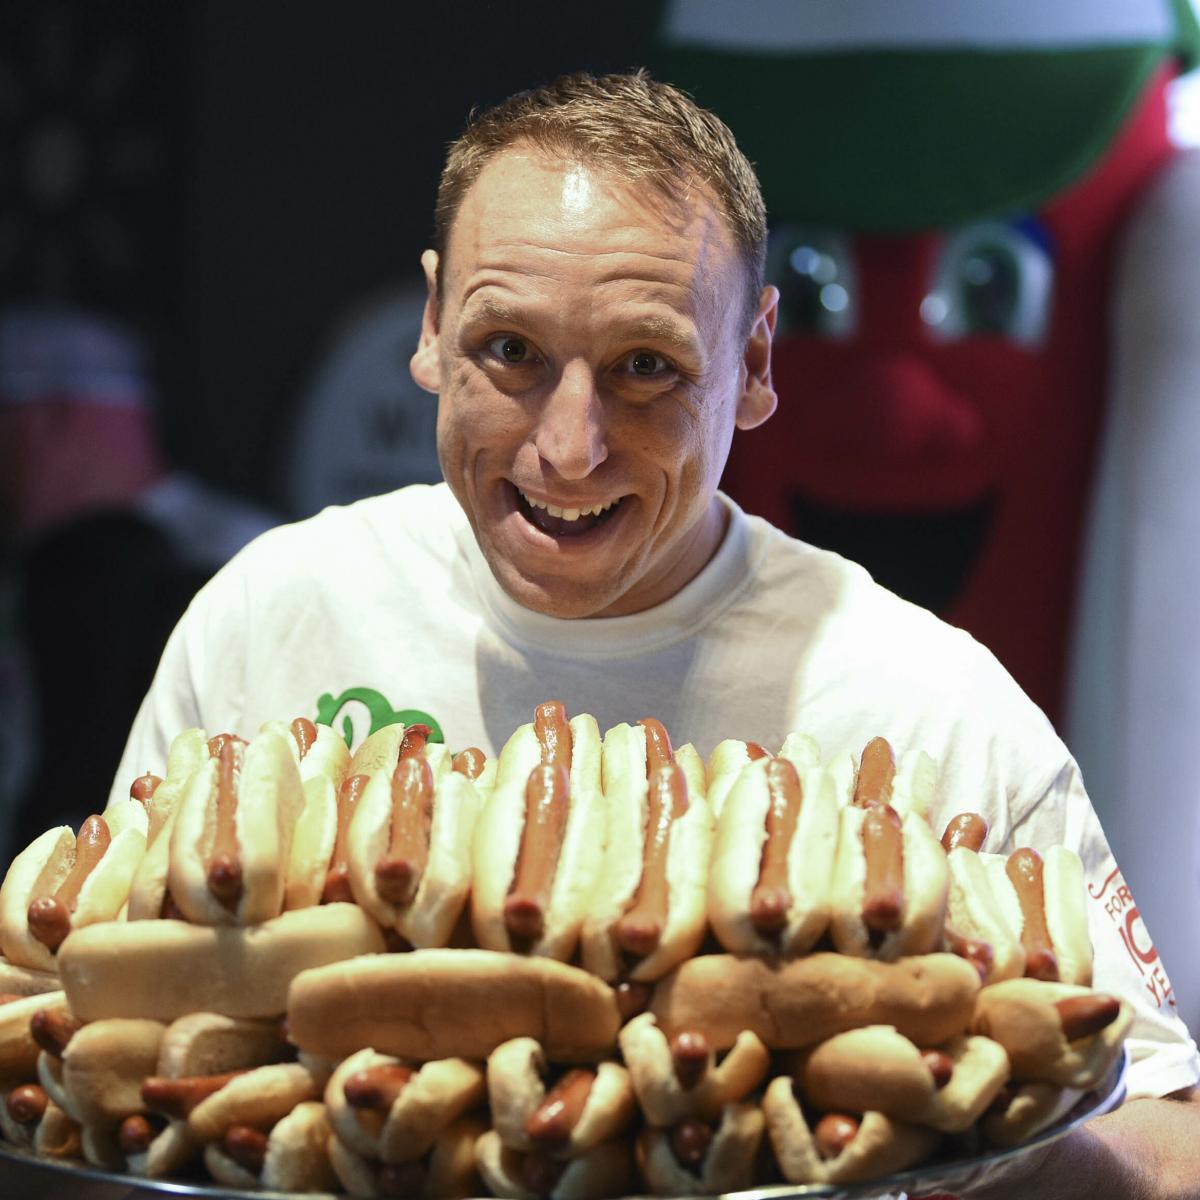 Os incríveis recorde de Joey Chestnut, o 'rei do hot dog' - ESPN